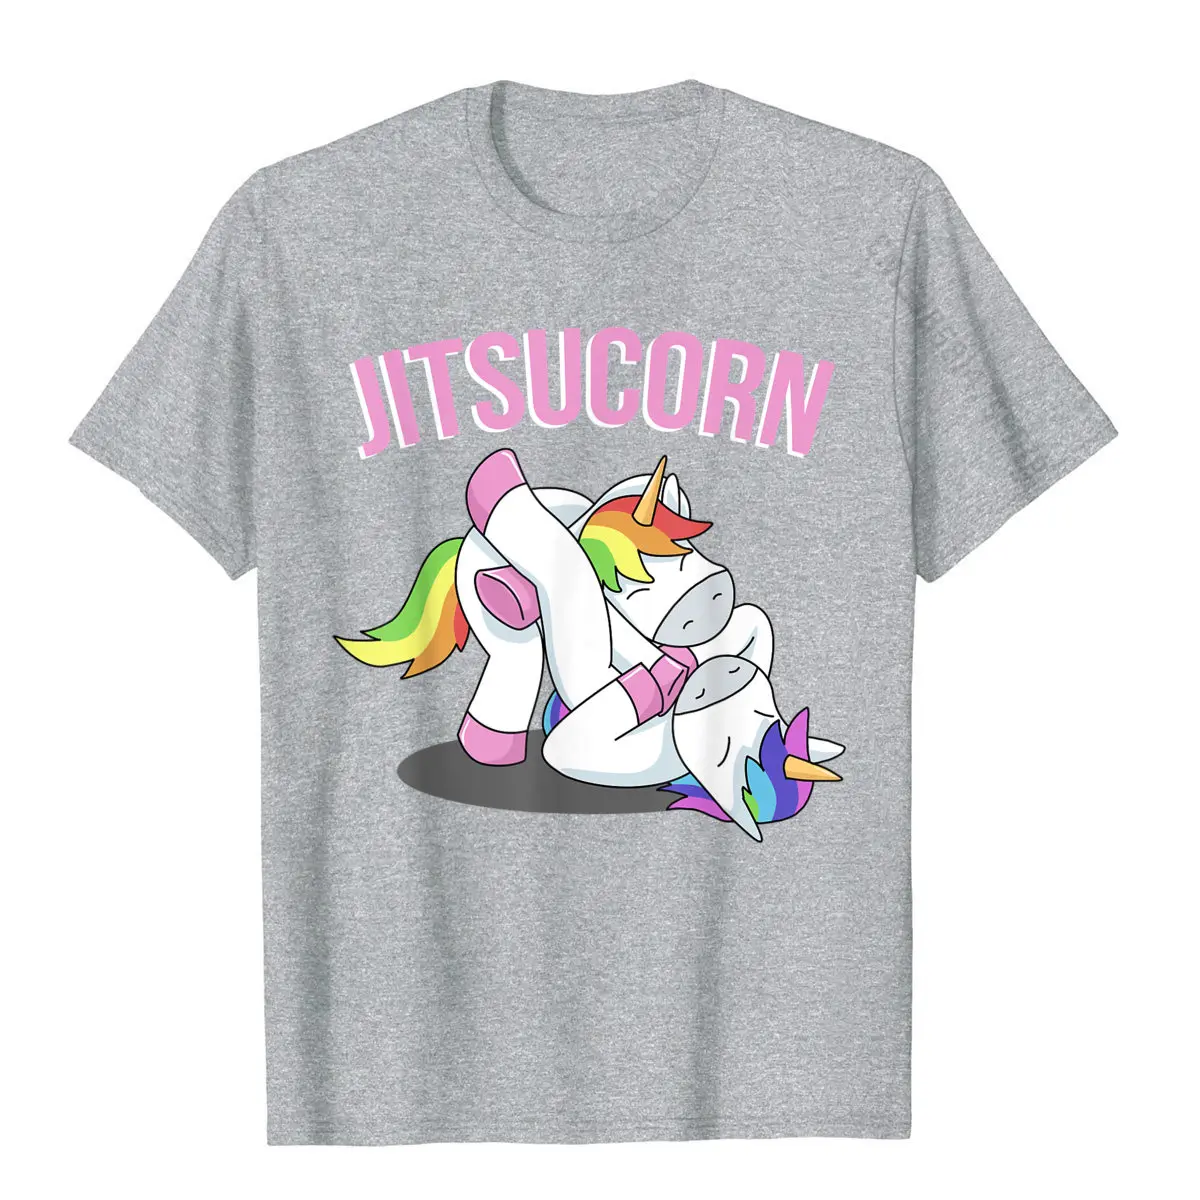 

2022 Fashion Shirts Unicorn Jitsucorn Kids Brazilian Jujitsu T-Shirt Cotton Male Tops T Shirt Cool T Shirts Group Prevailing